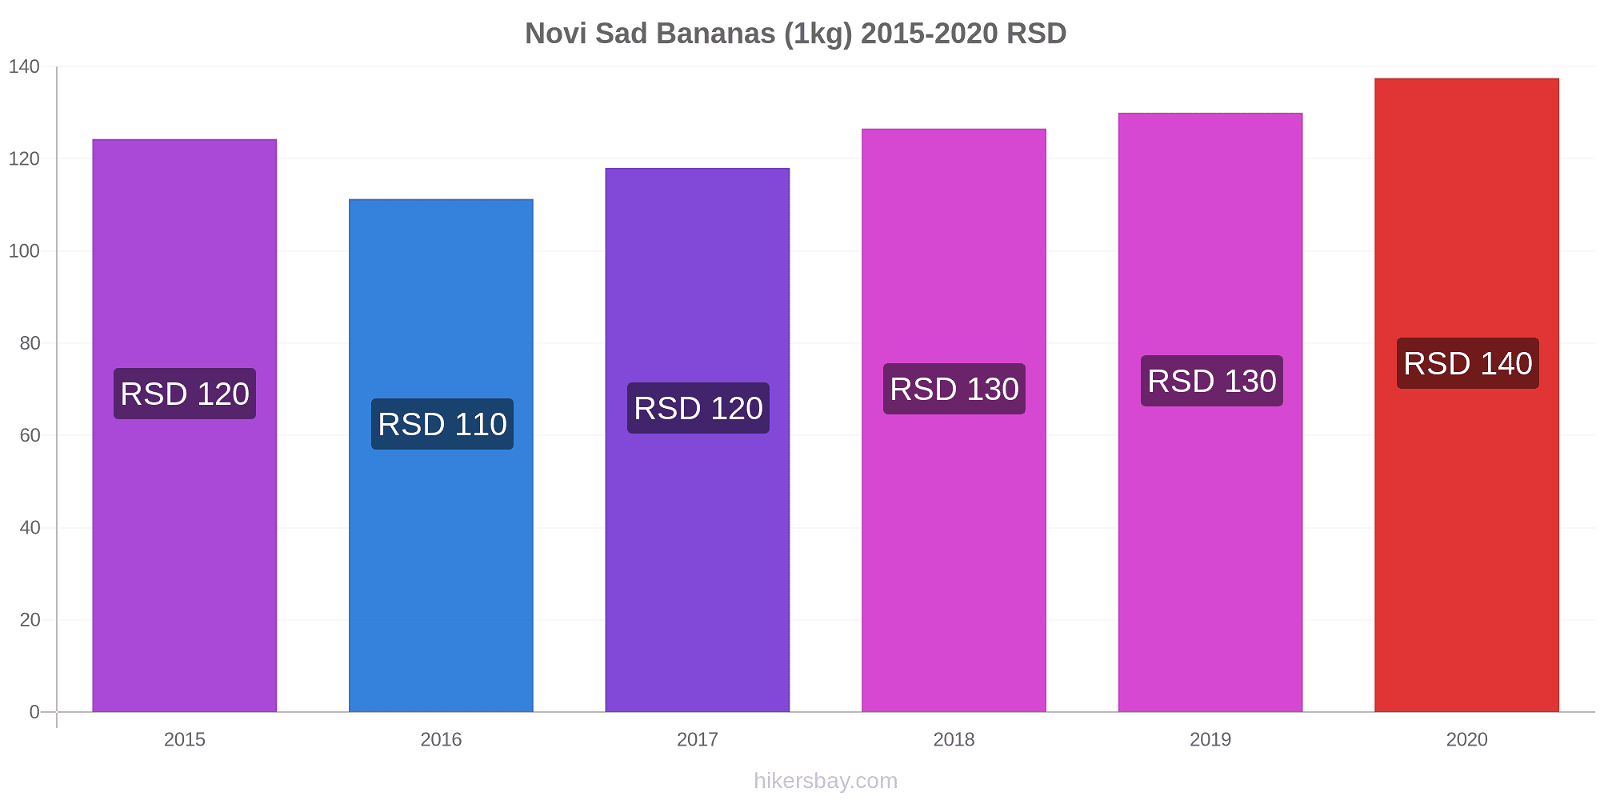 Novi Sad price changes Bananas (1kg) hikersbay.com